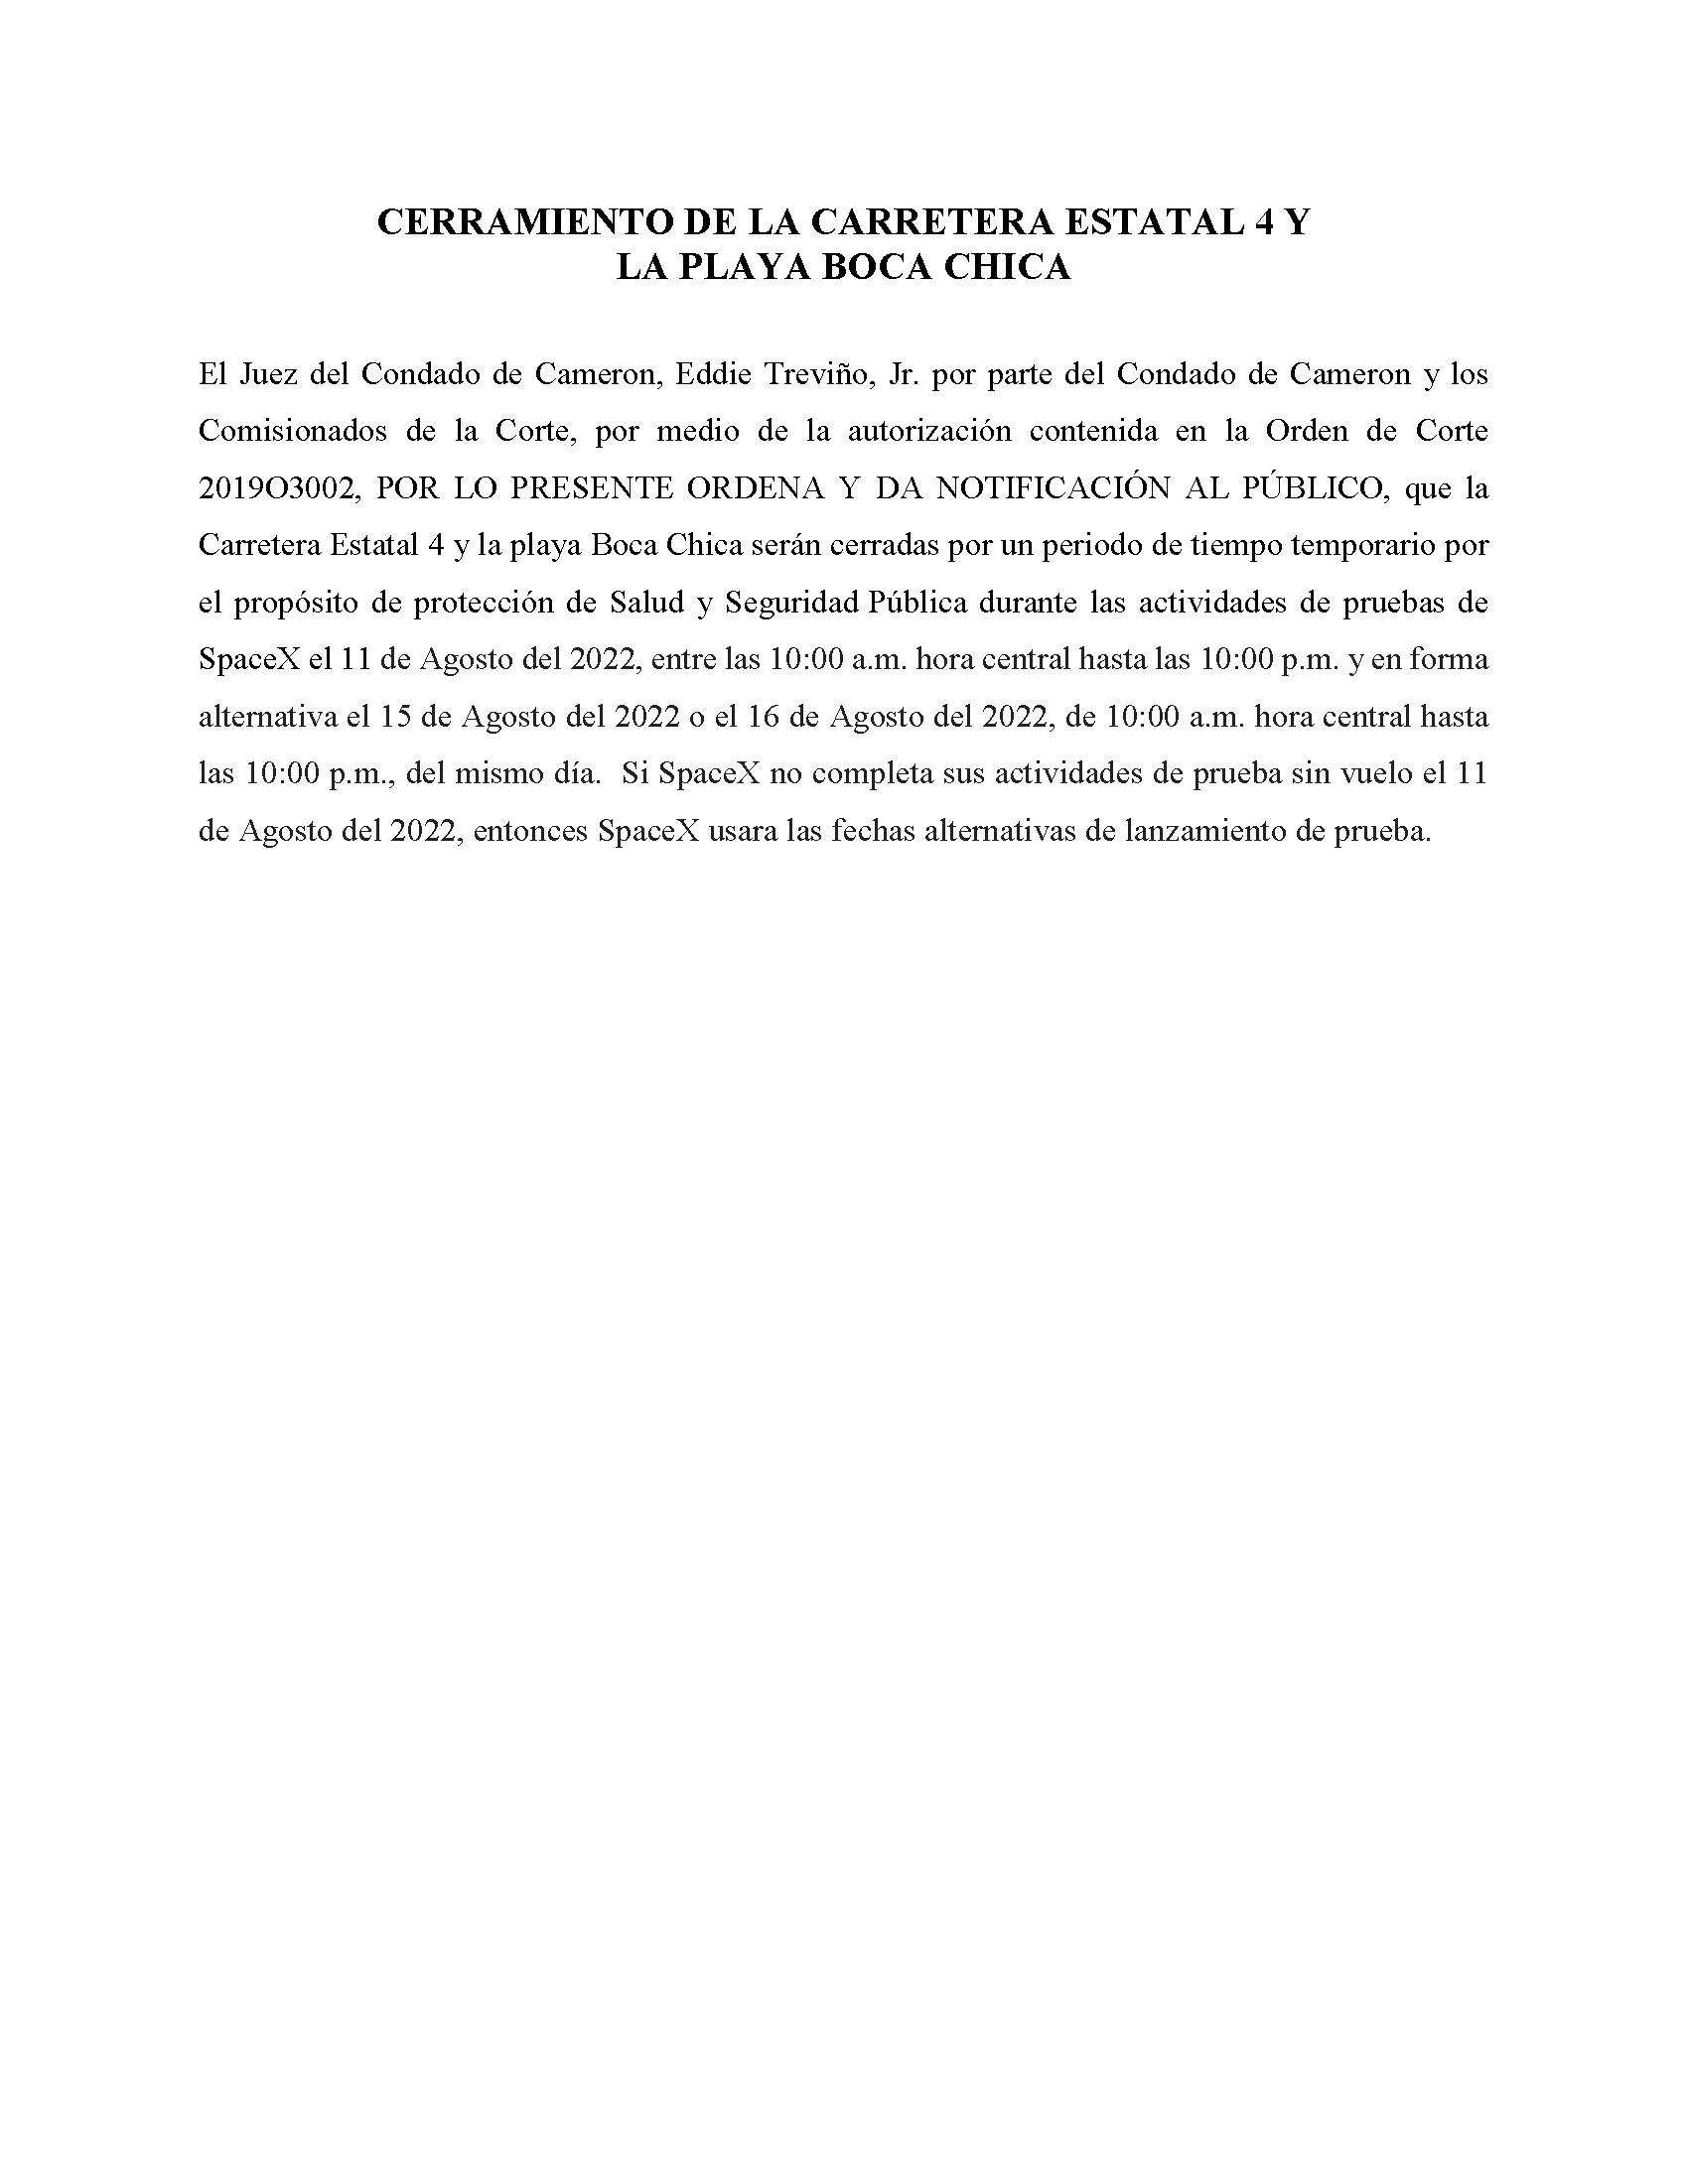 ORDER.CLOSURE OF HIGHWAY 4 Y LA PLAYA BOCA CHICA.SPANISH.08.11.2022